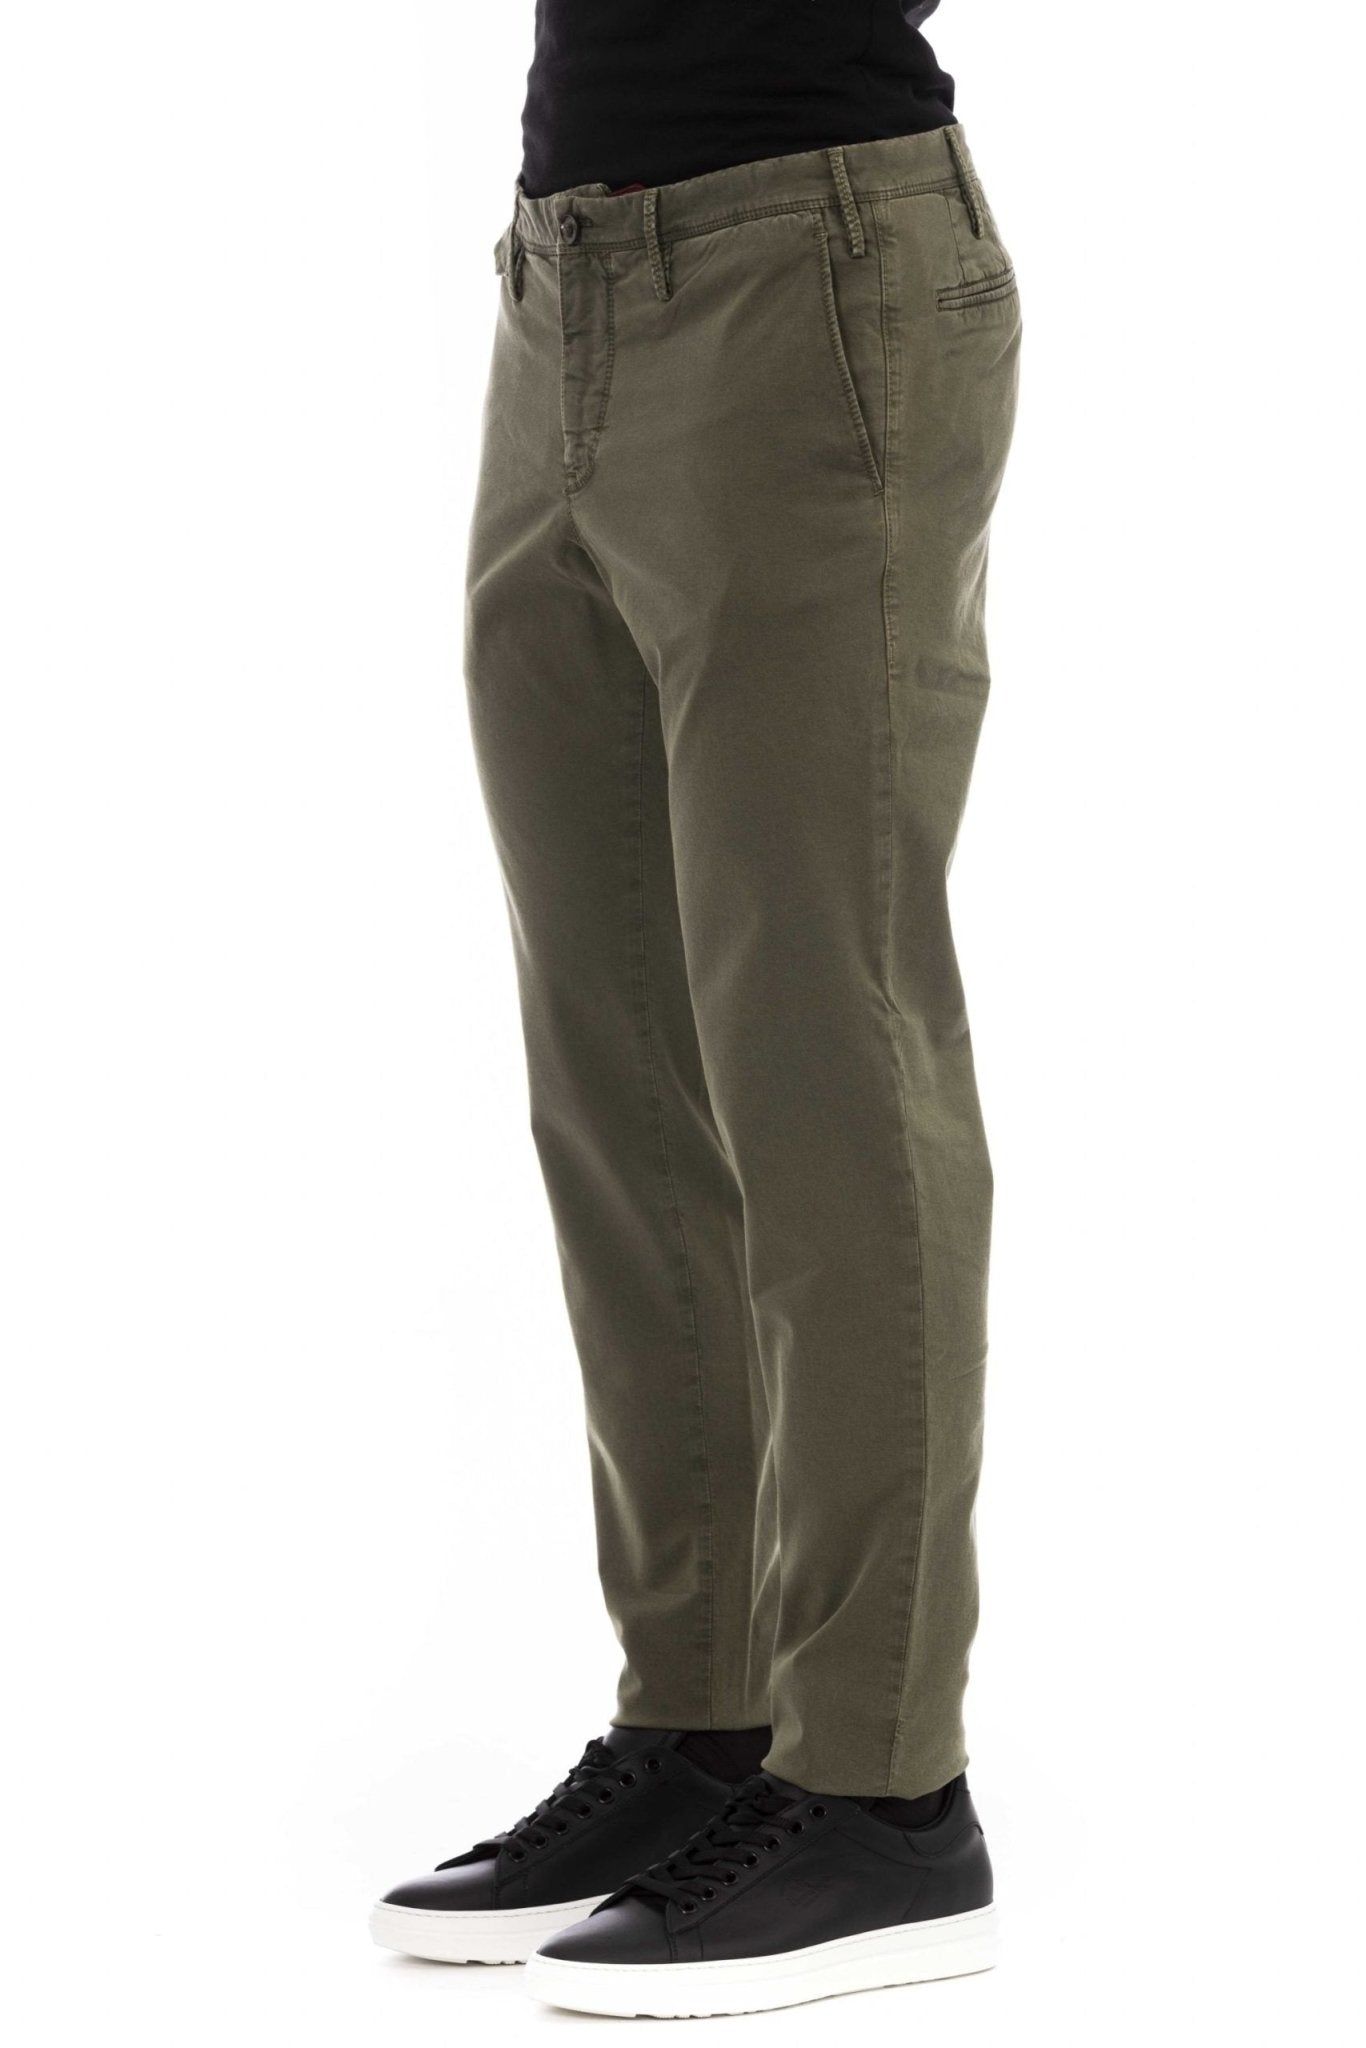 PT Torino Army Cotton Jeans & Pant - Fizigo